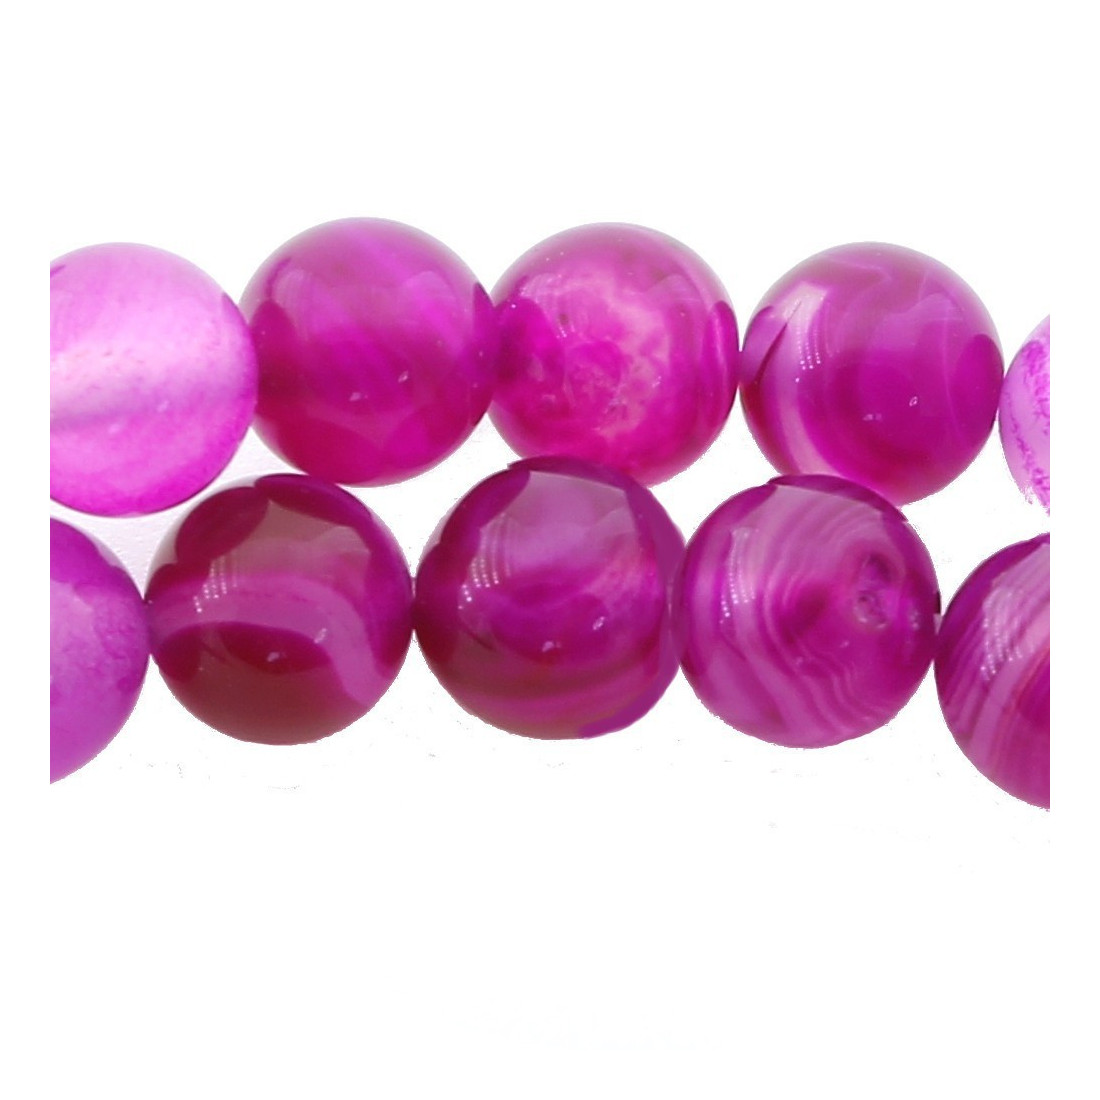 Fil de 95 perles rondes 4mm 4 mm en agate rose transparente